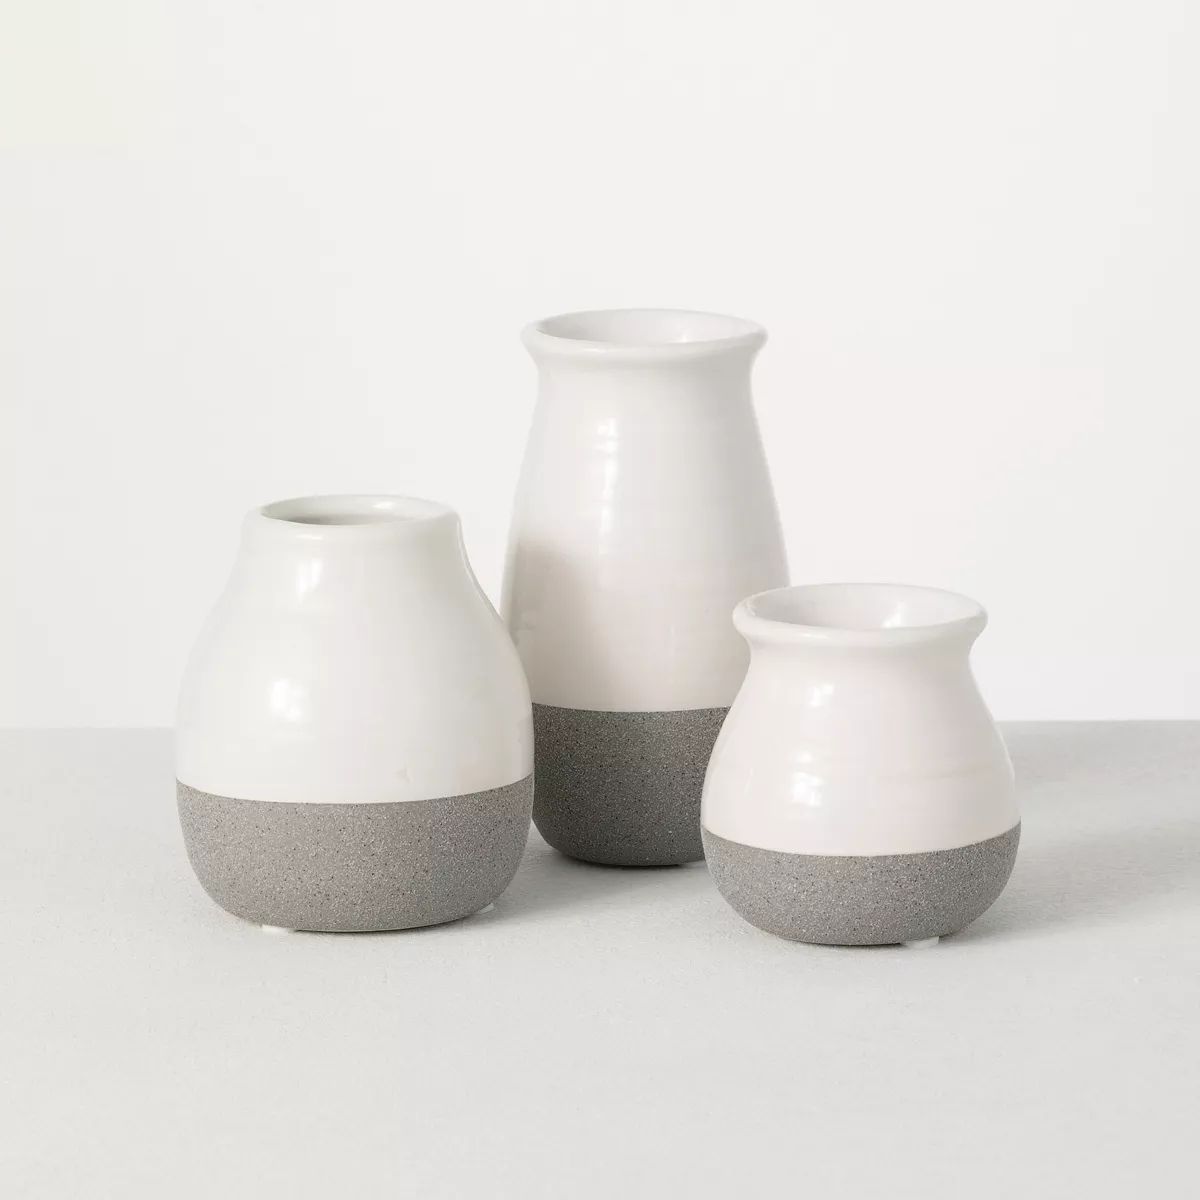 Sullivans Set of 3 Petite Ceramic Vases 3"H, 4.5"H & 5.5"H Blue and Brown | Target